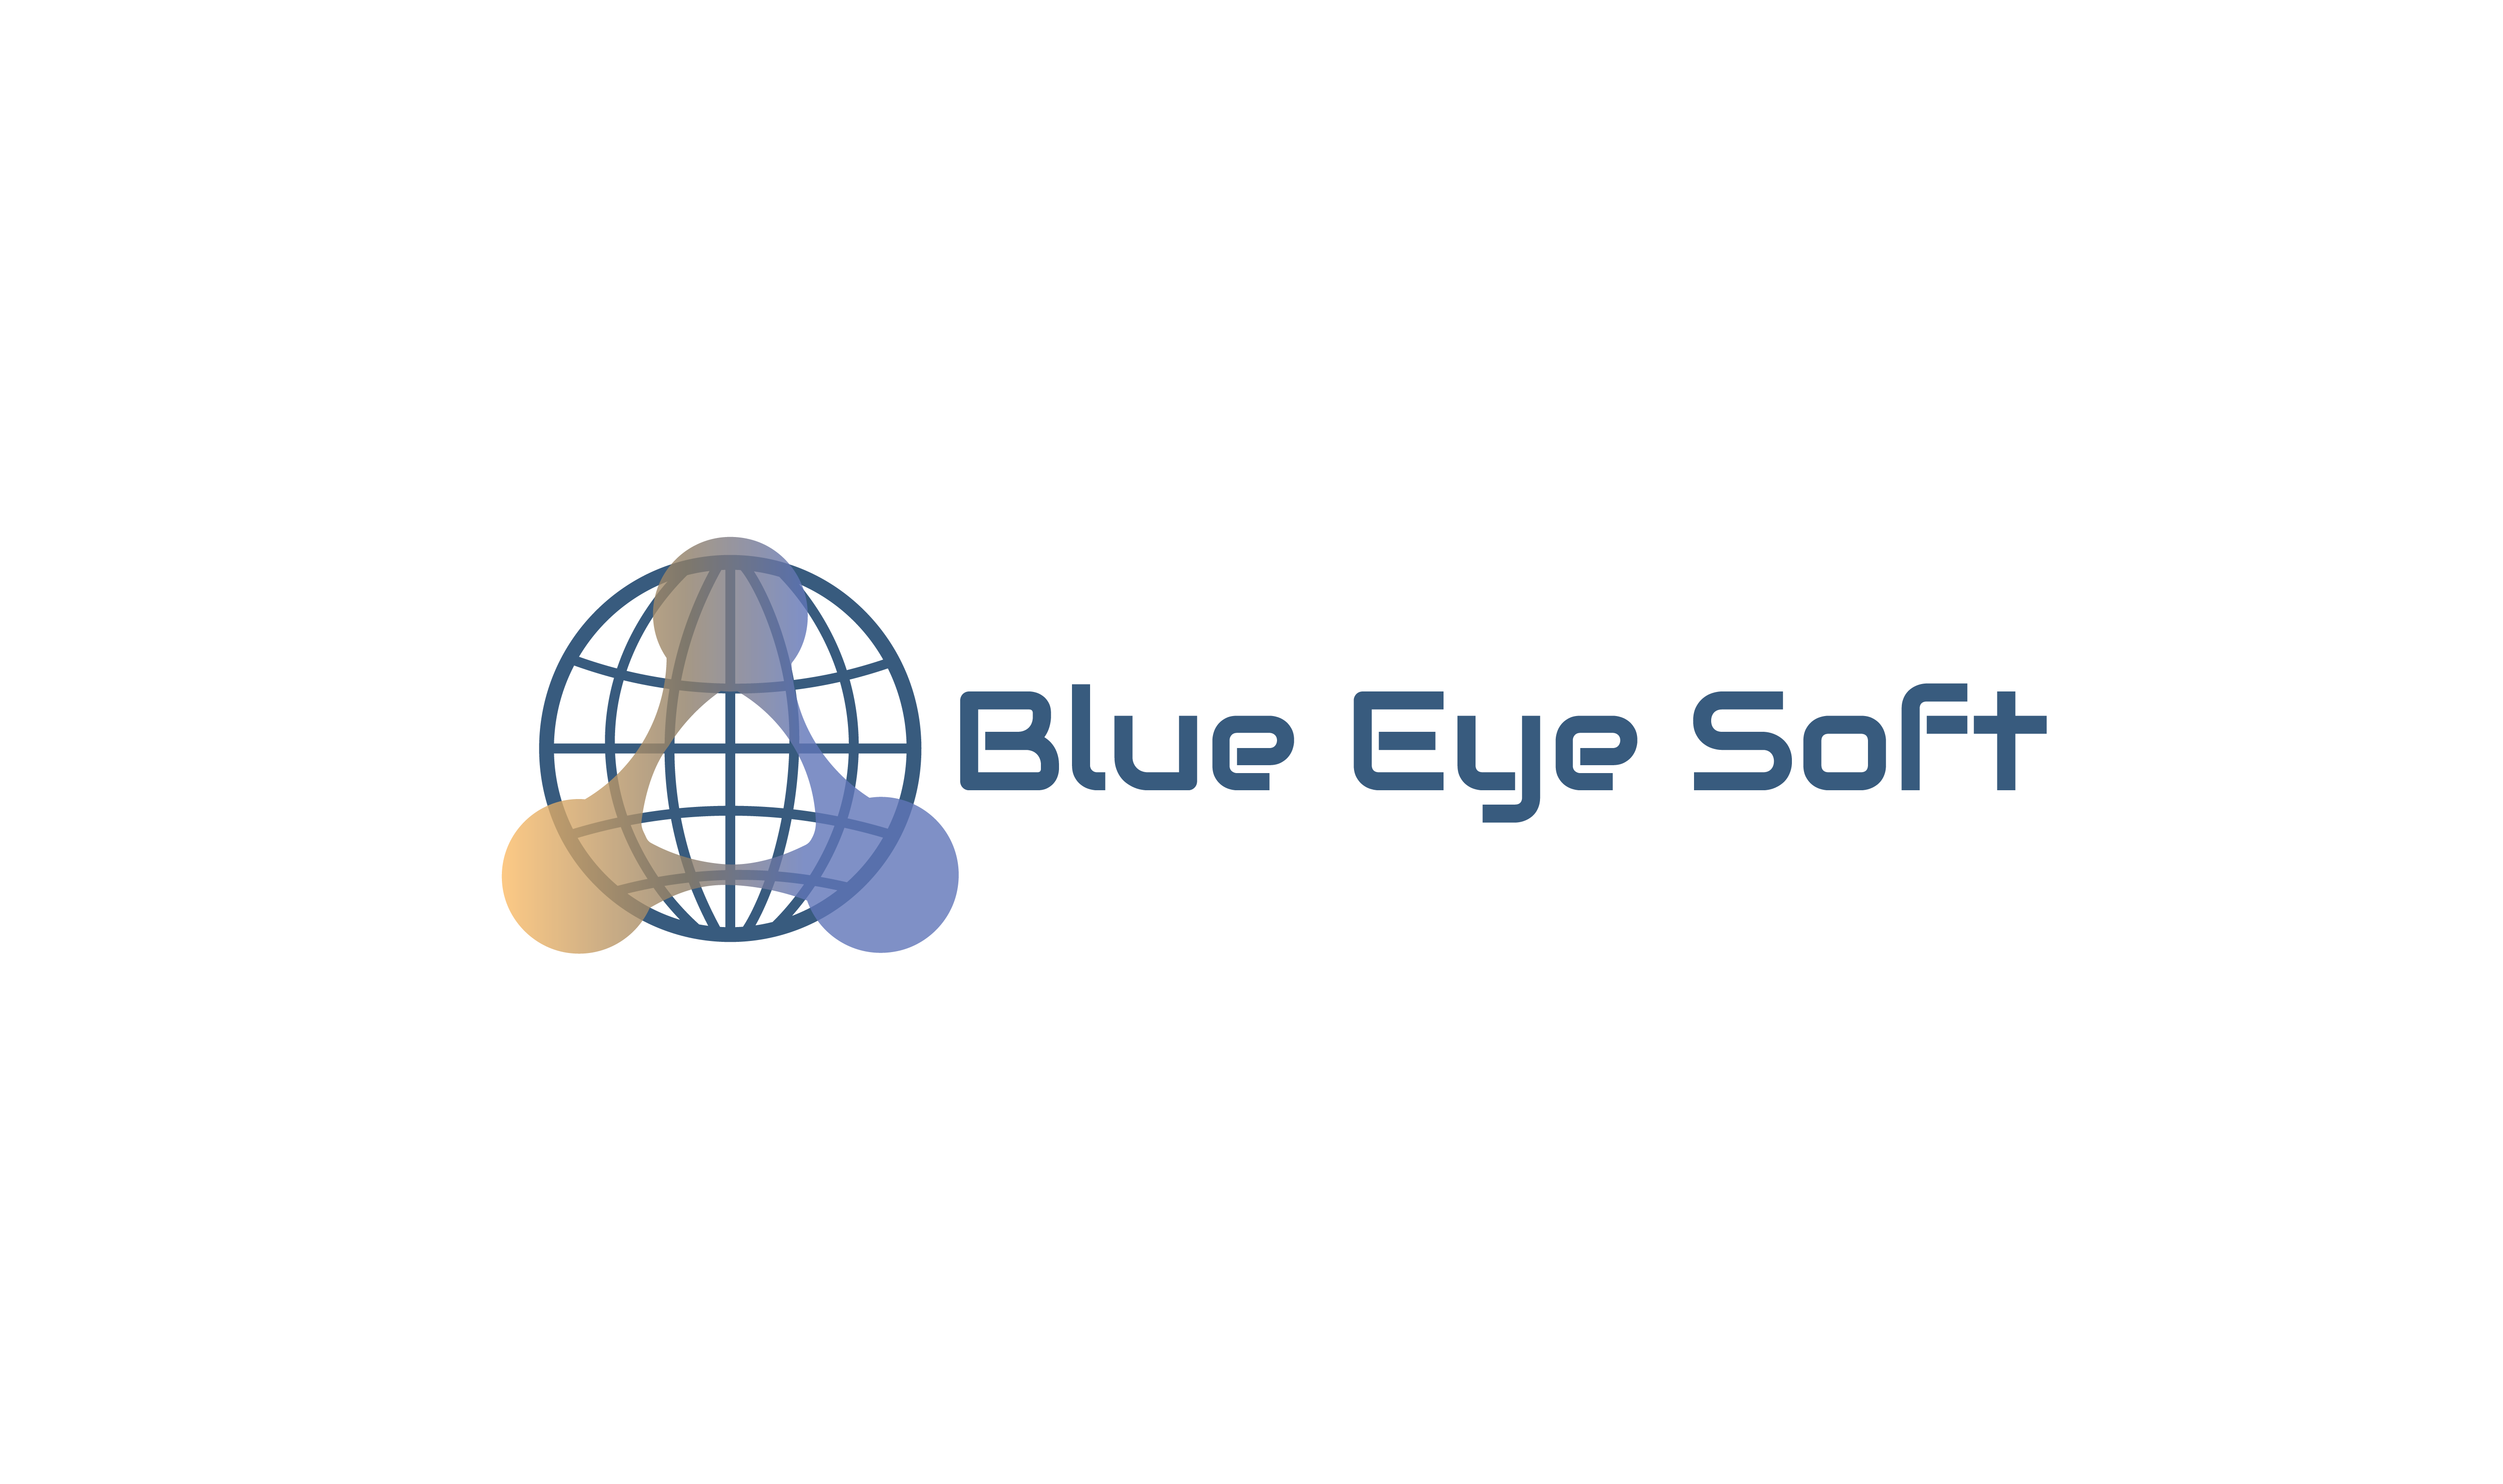 Blue Eye Soft Corp. logo